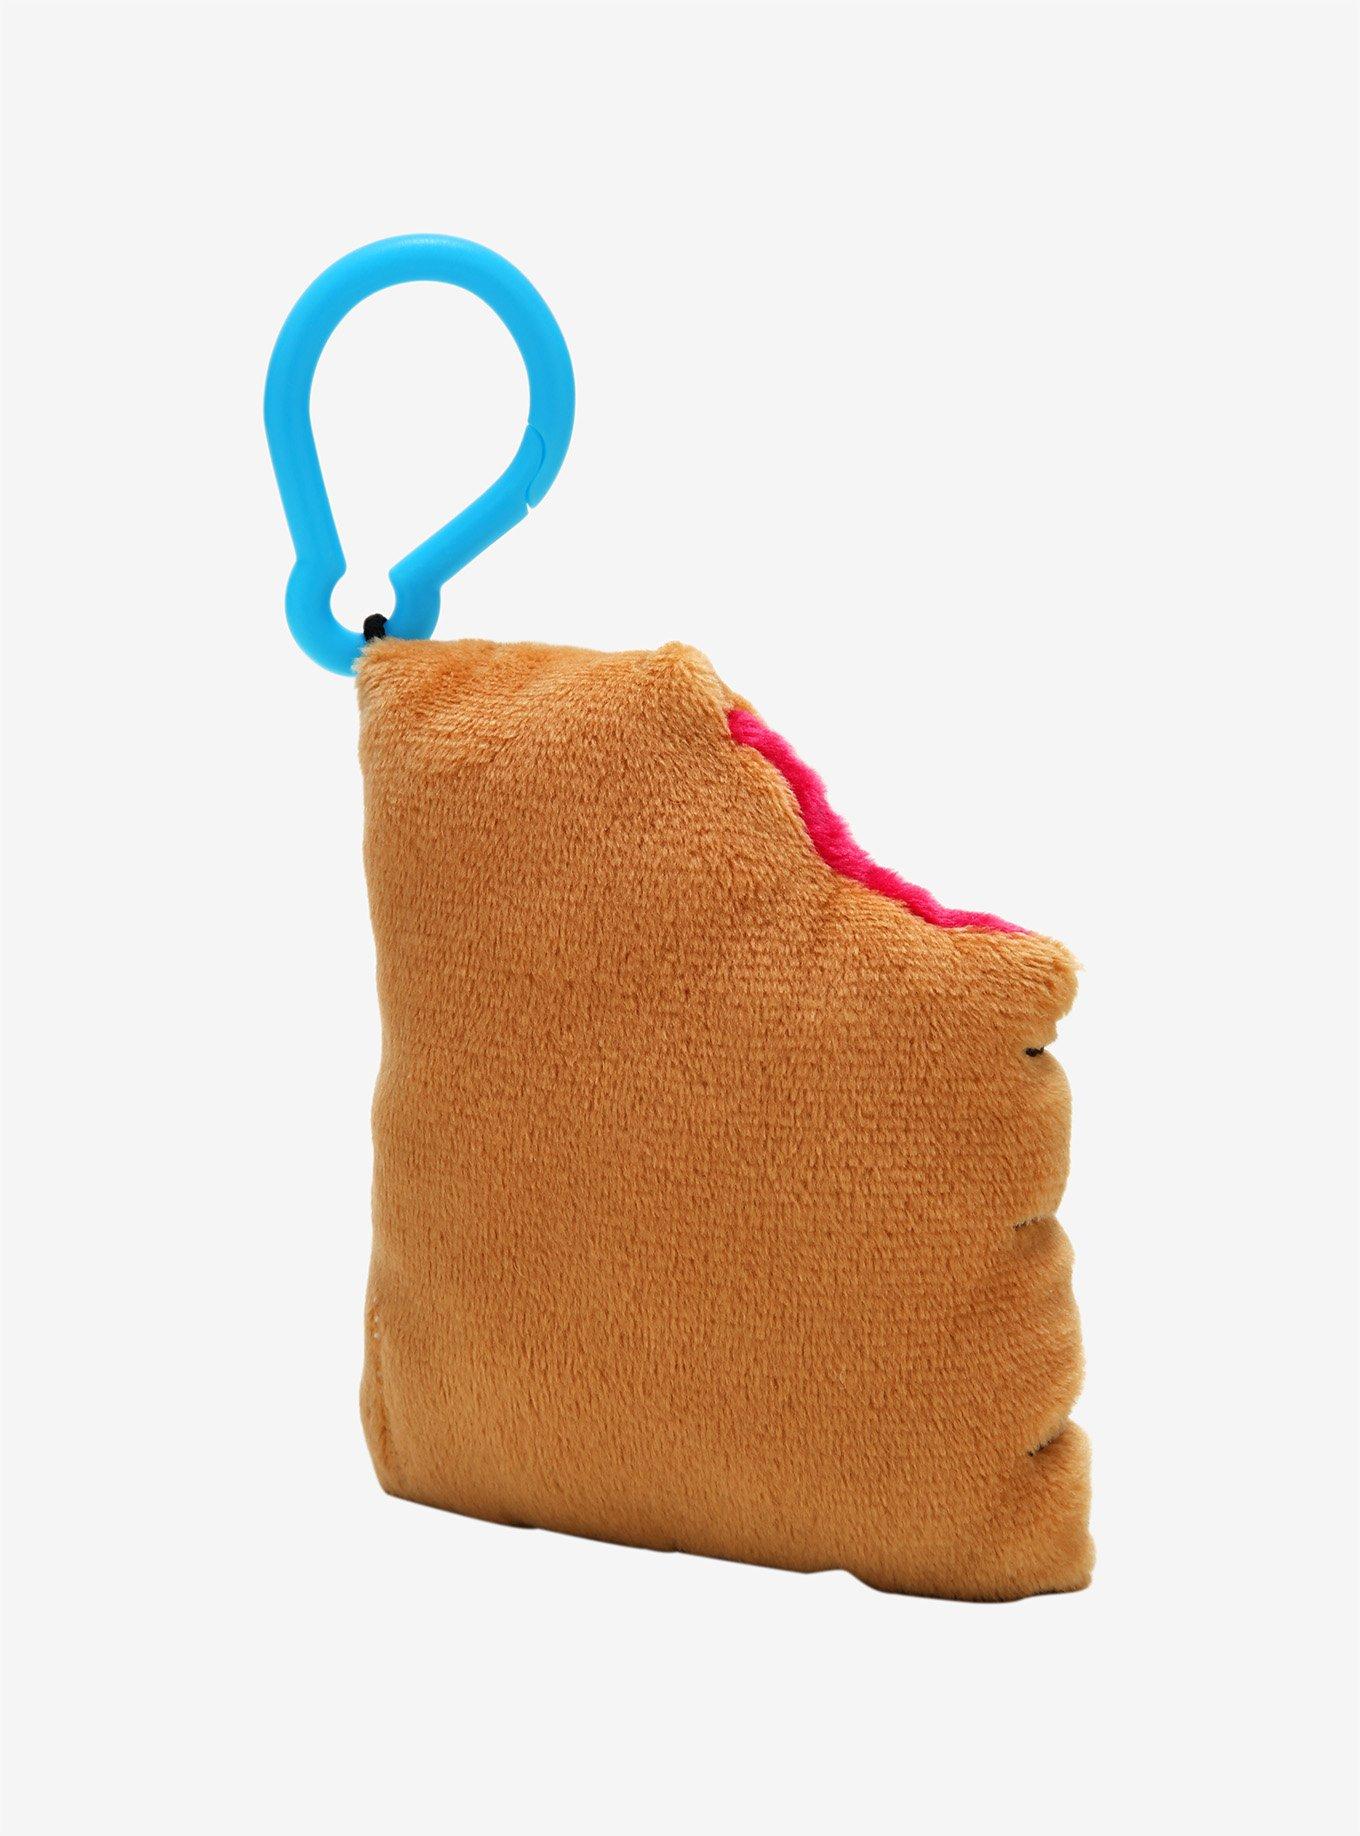 Squishable Micro Comfort Food Toaster Tart Plush Keychain, , alternate